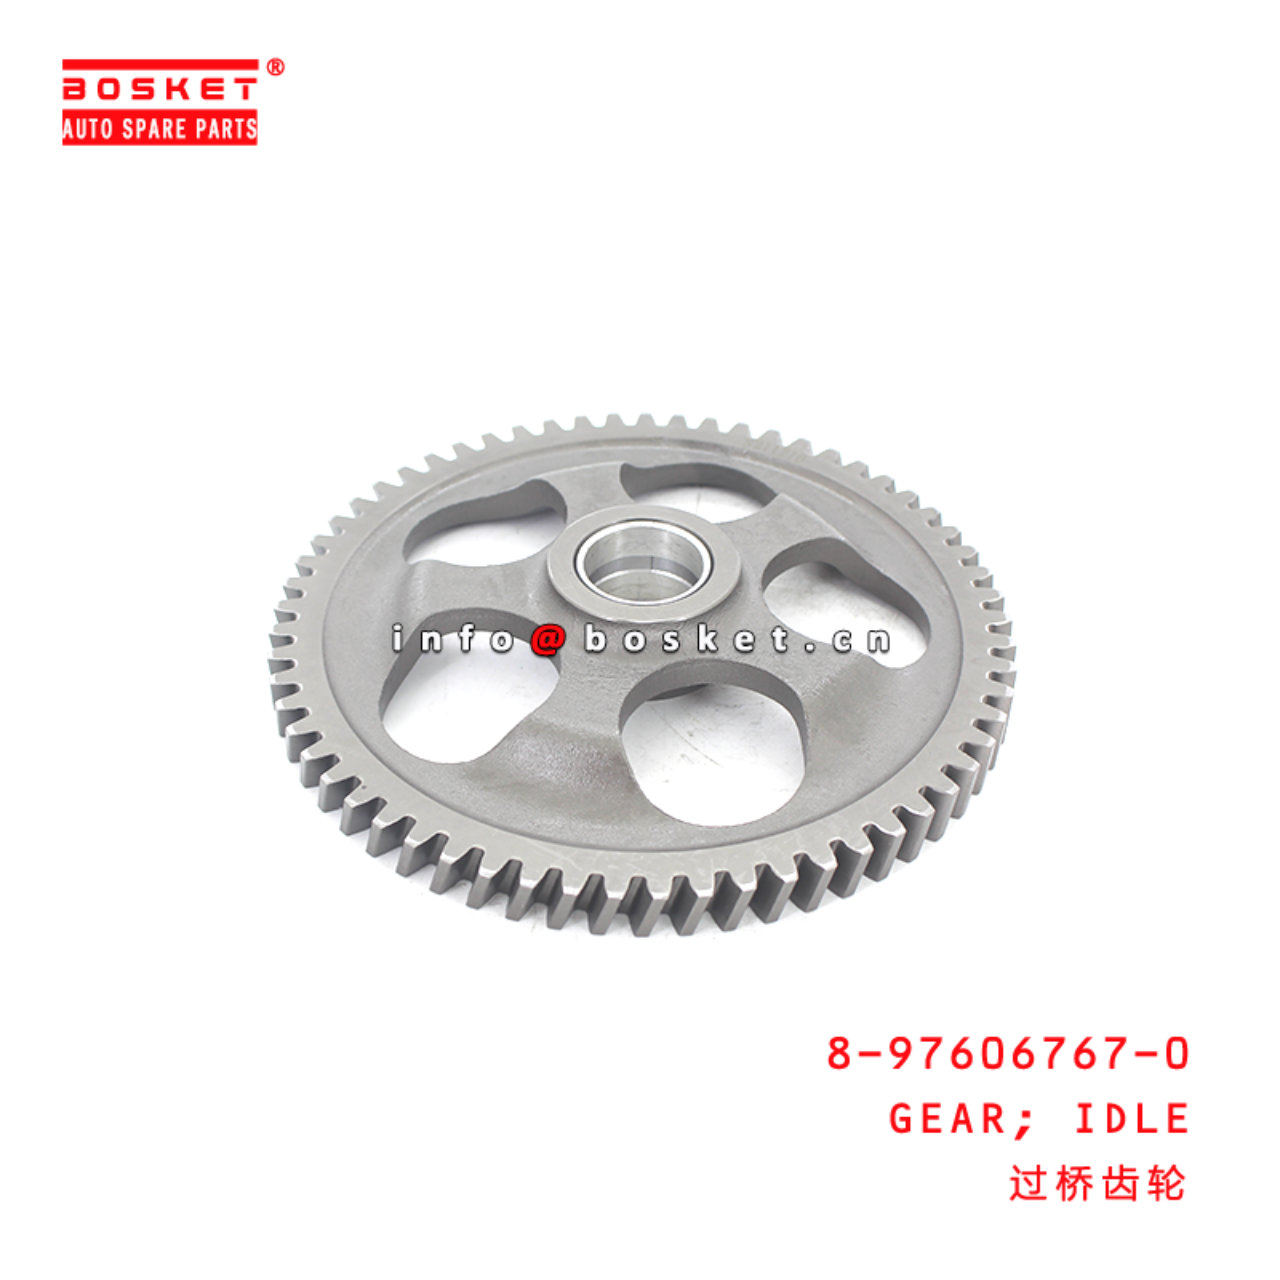 8-97606767-0 Idle Gear Suitable for ISUZU 700P 8976067670